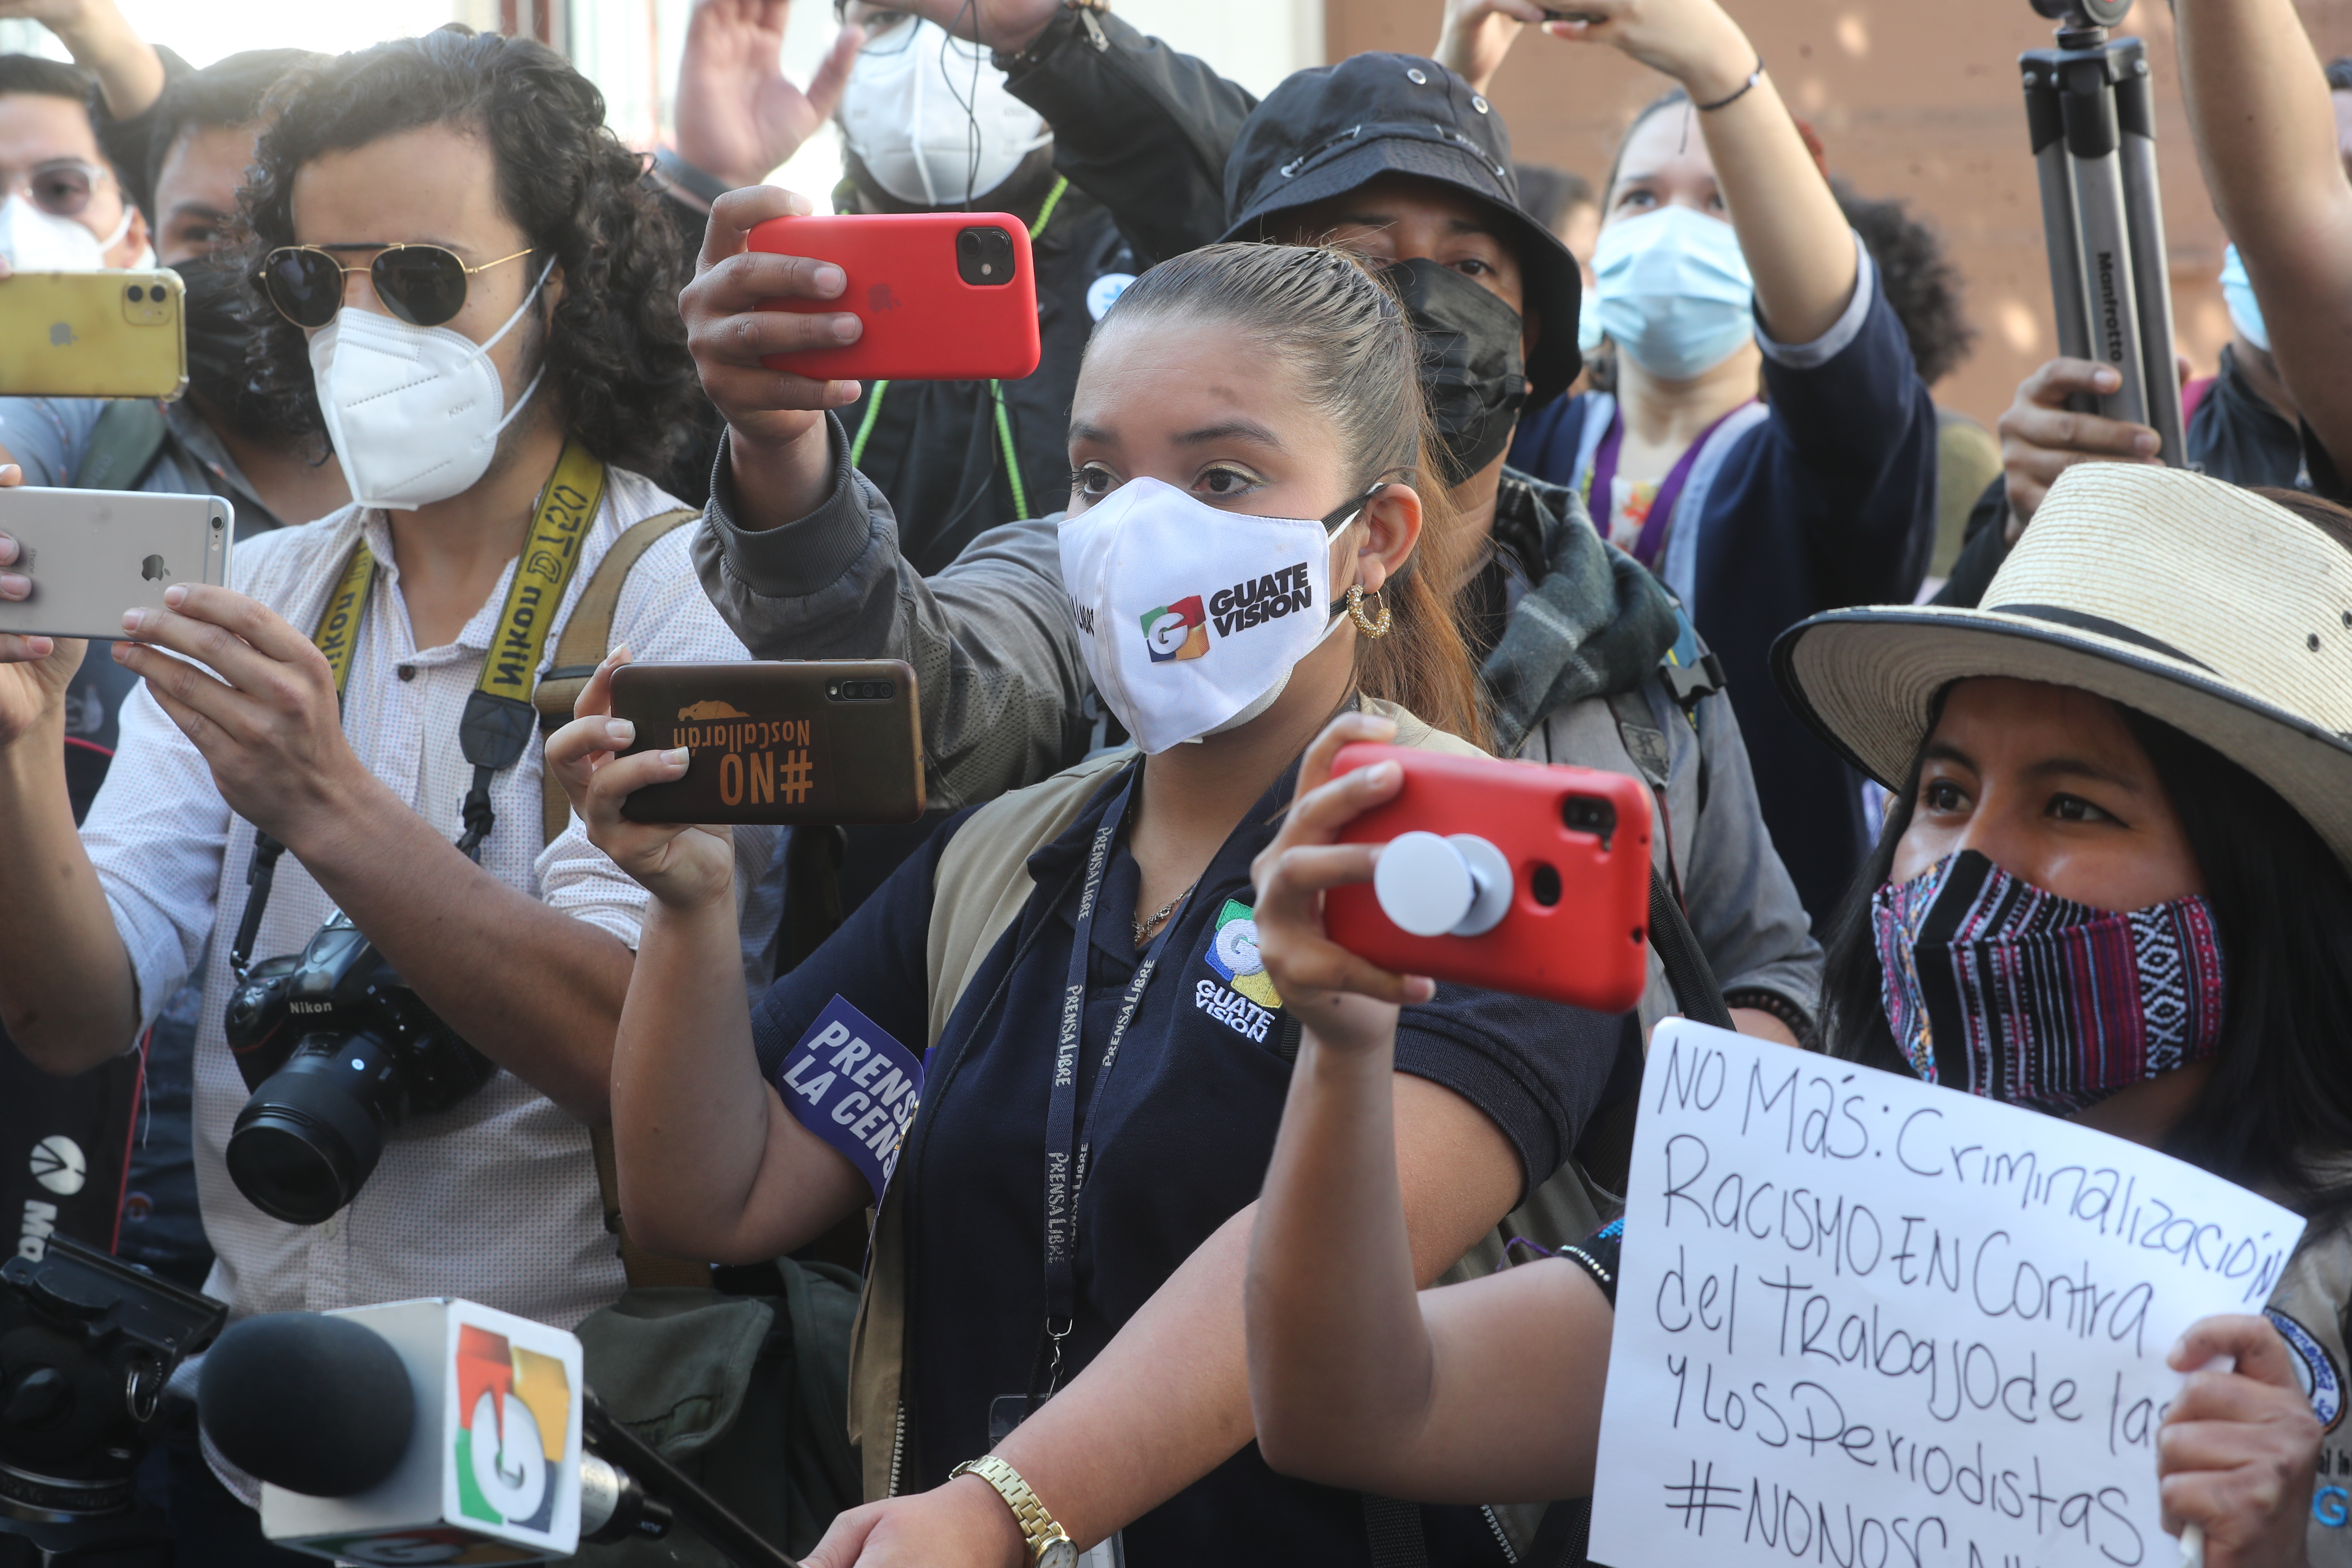 Periodistas de Guatemala se enfrentan a serios problemas relacionados con la libertad de prensa, según un informe de la APG. (Foto Prensa Libre: Érick Ávila)